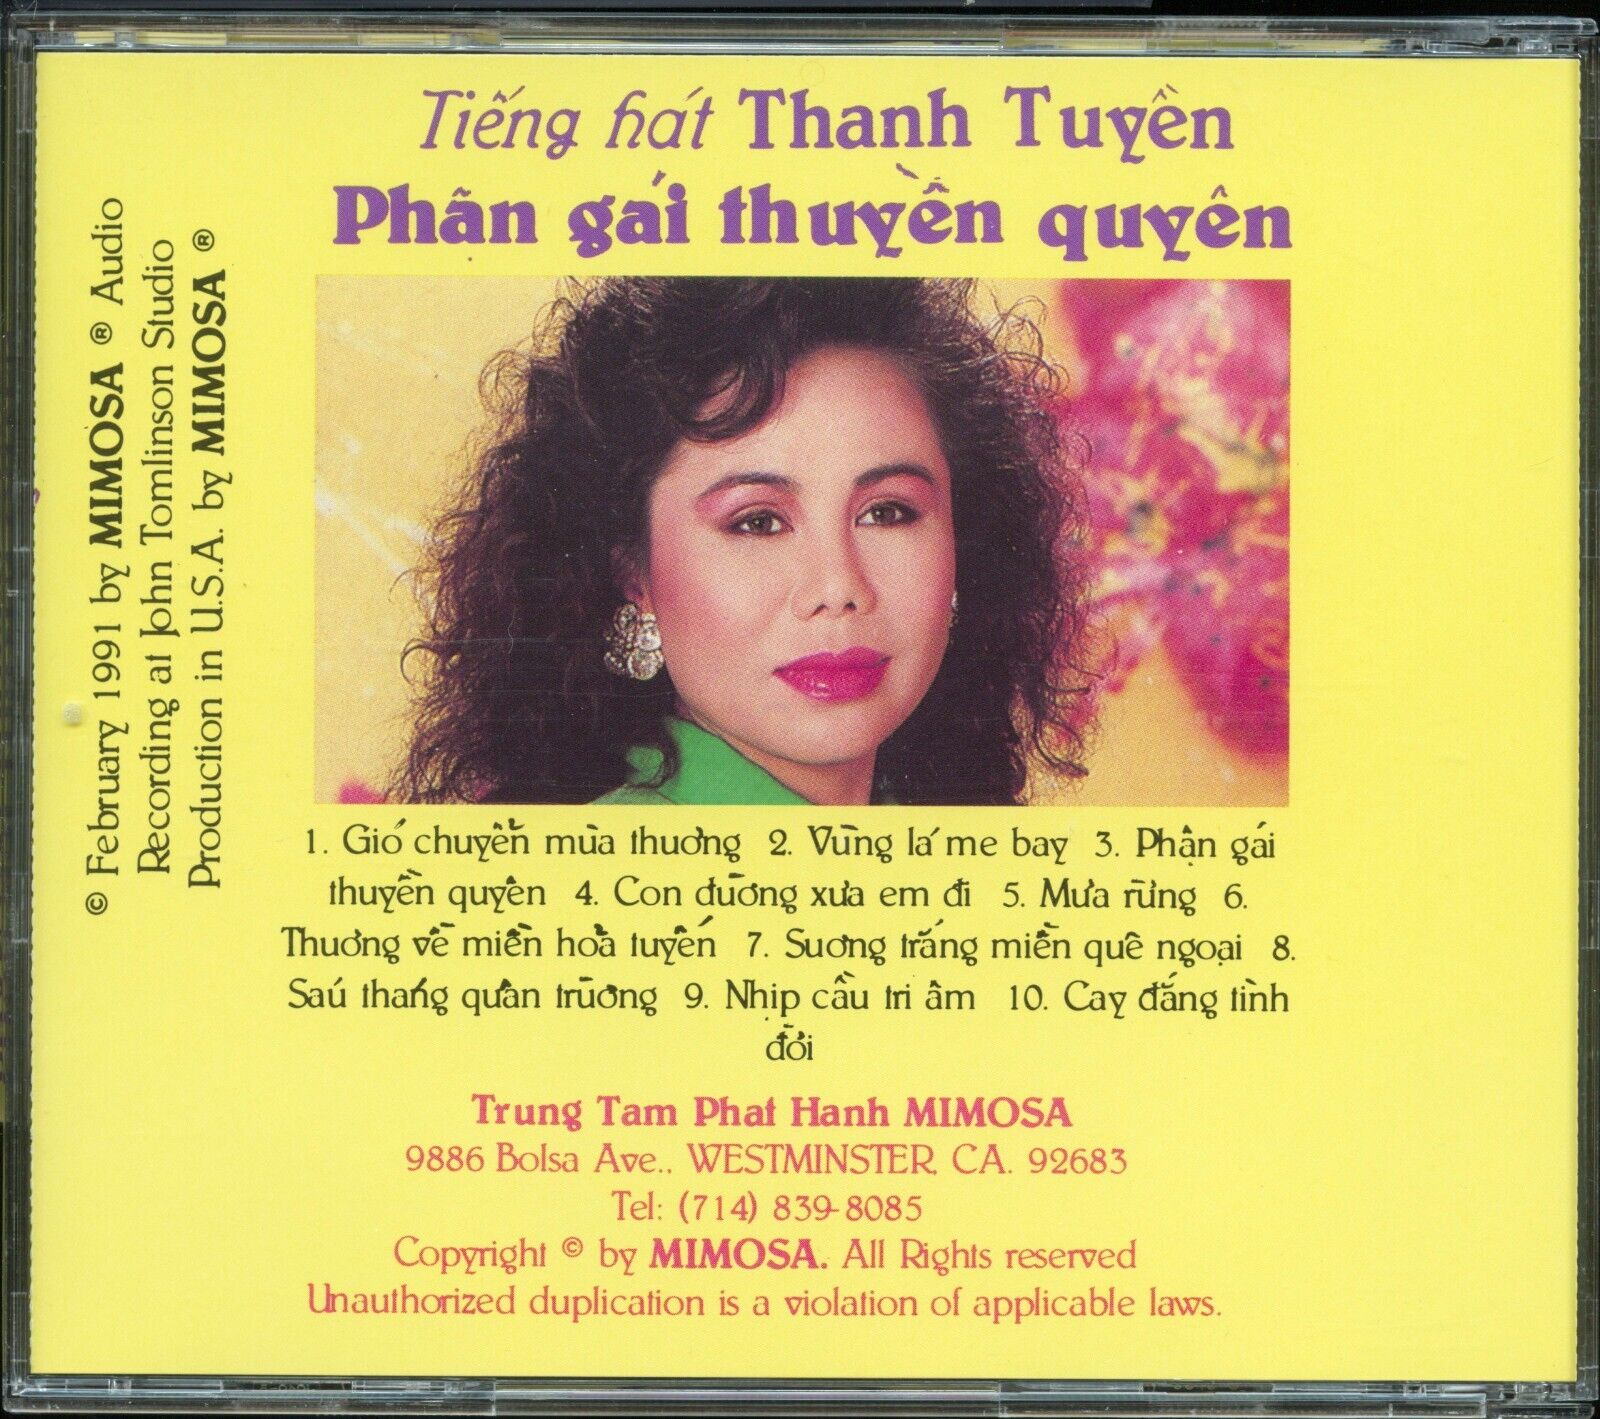 Vietnamese music CD: Phan gai thuyen quyen. Tieng hat Thanh Tuyen. 1991 |  eBay